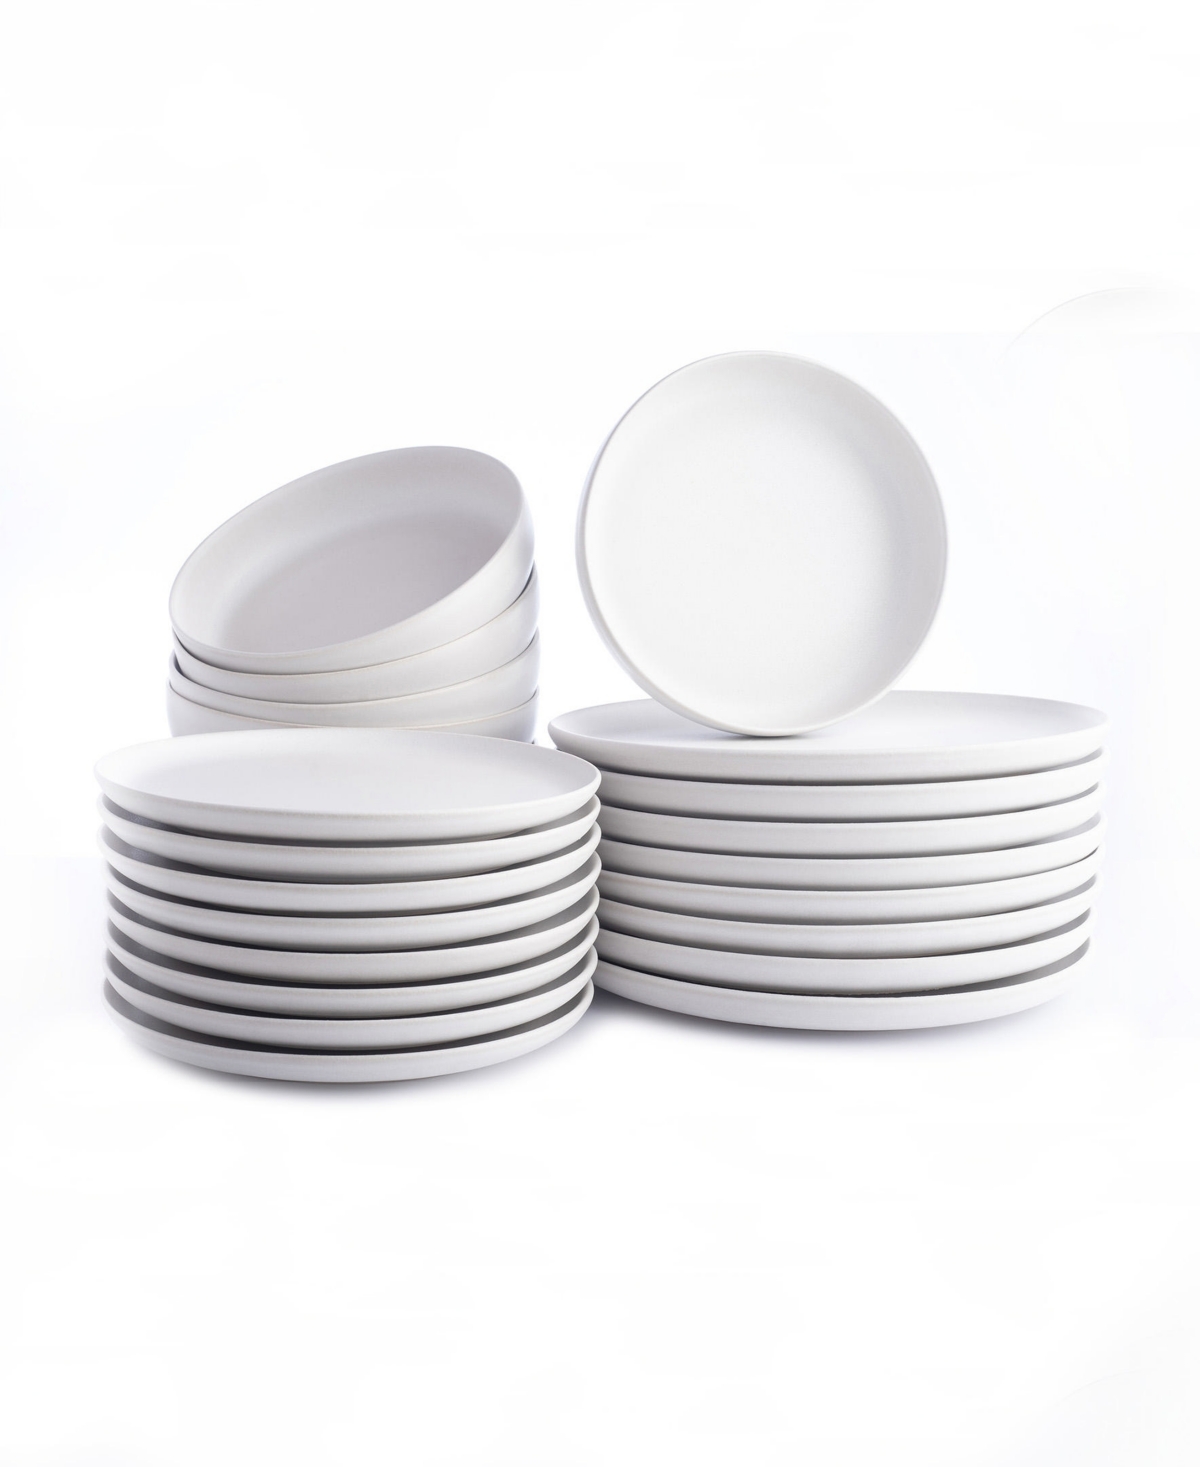 Porto by Stone Lain Macchio Stoneware Full Dinnerware Set, 24 Pcs, Service for 8 - White Matte